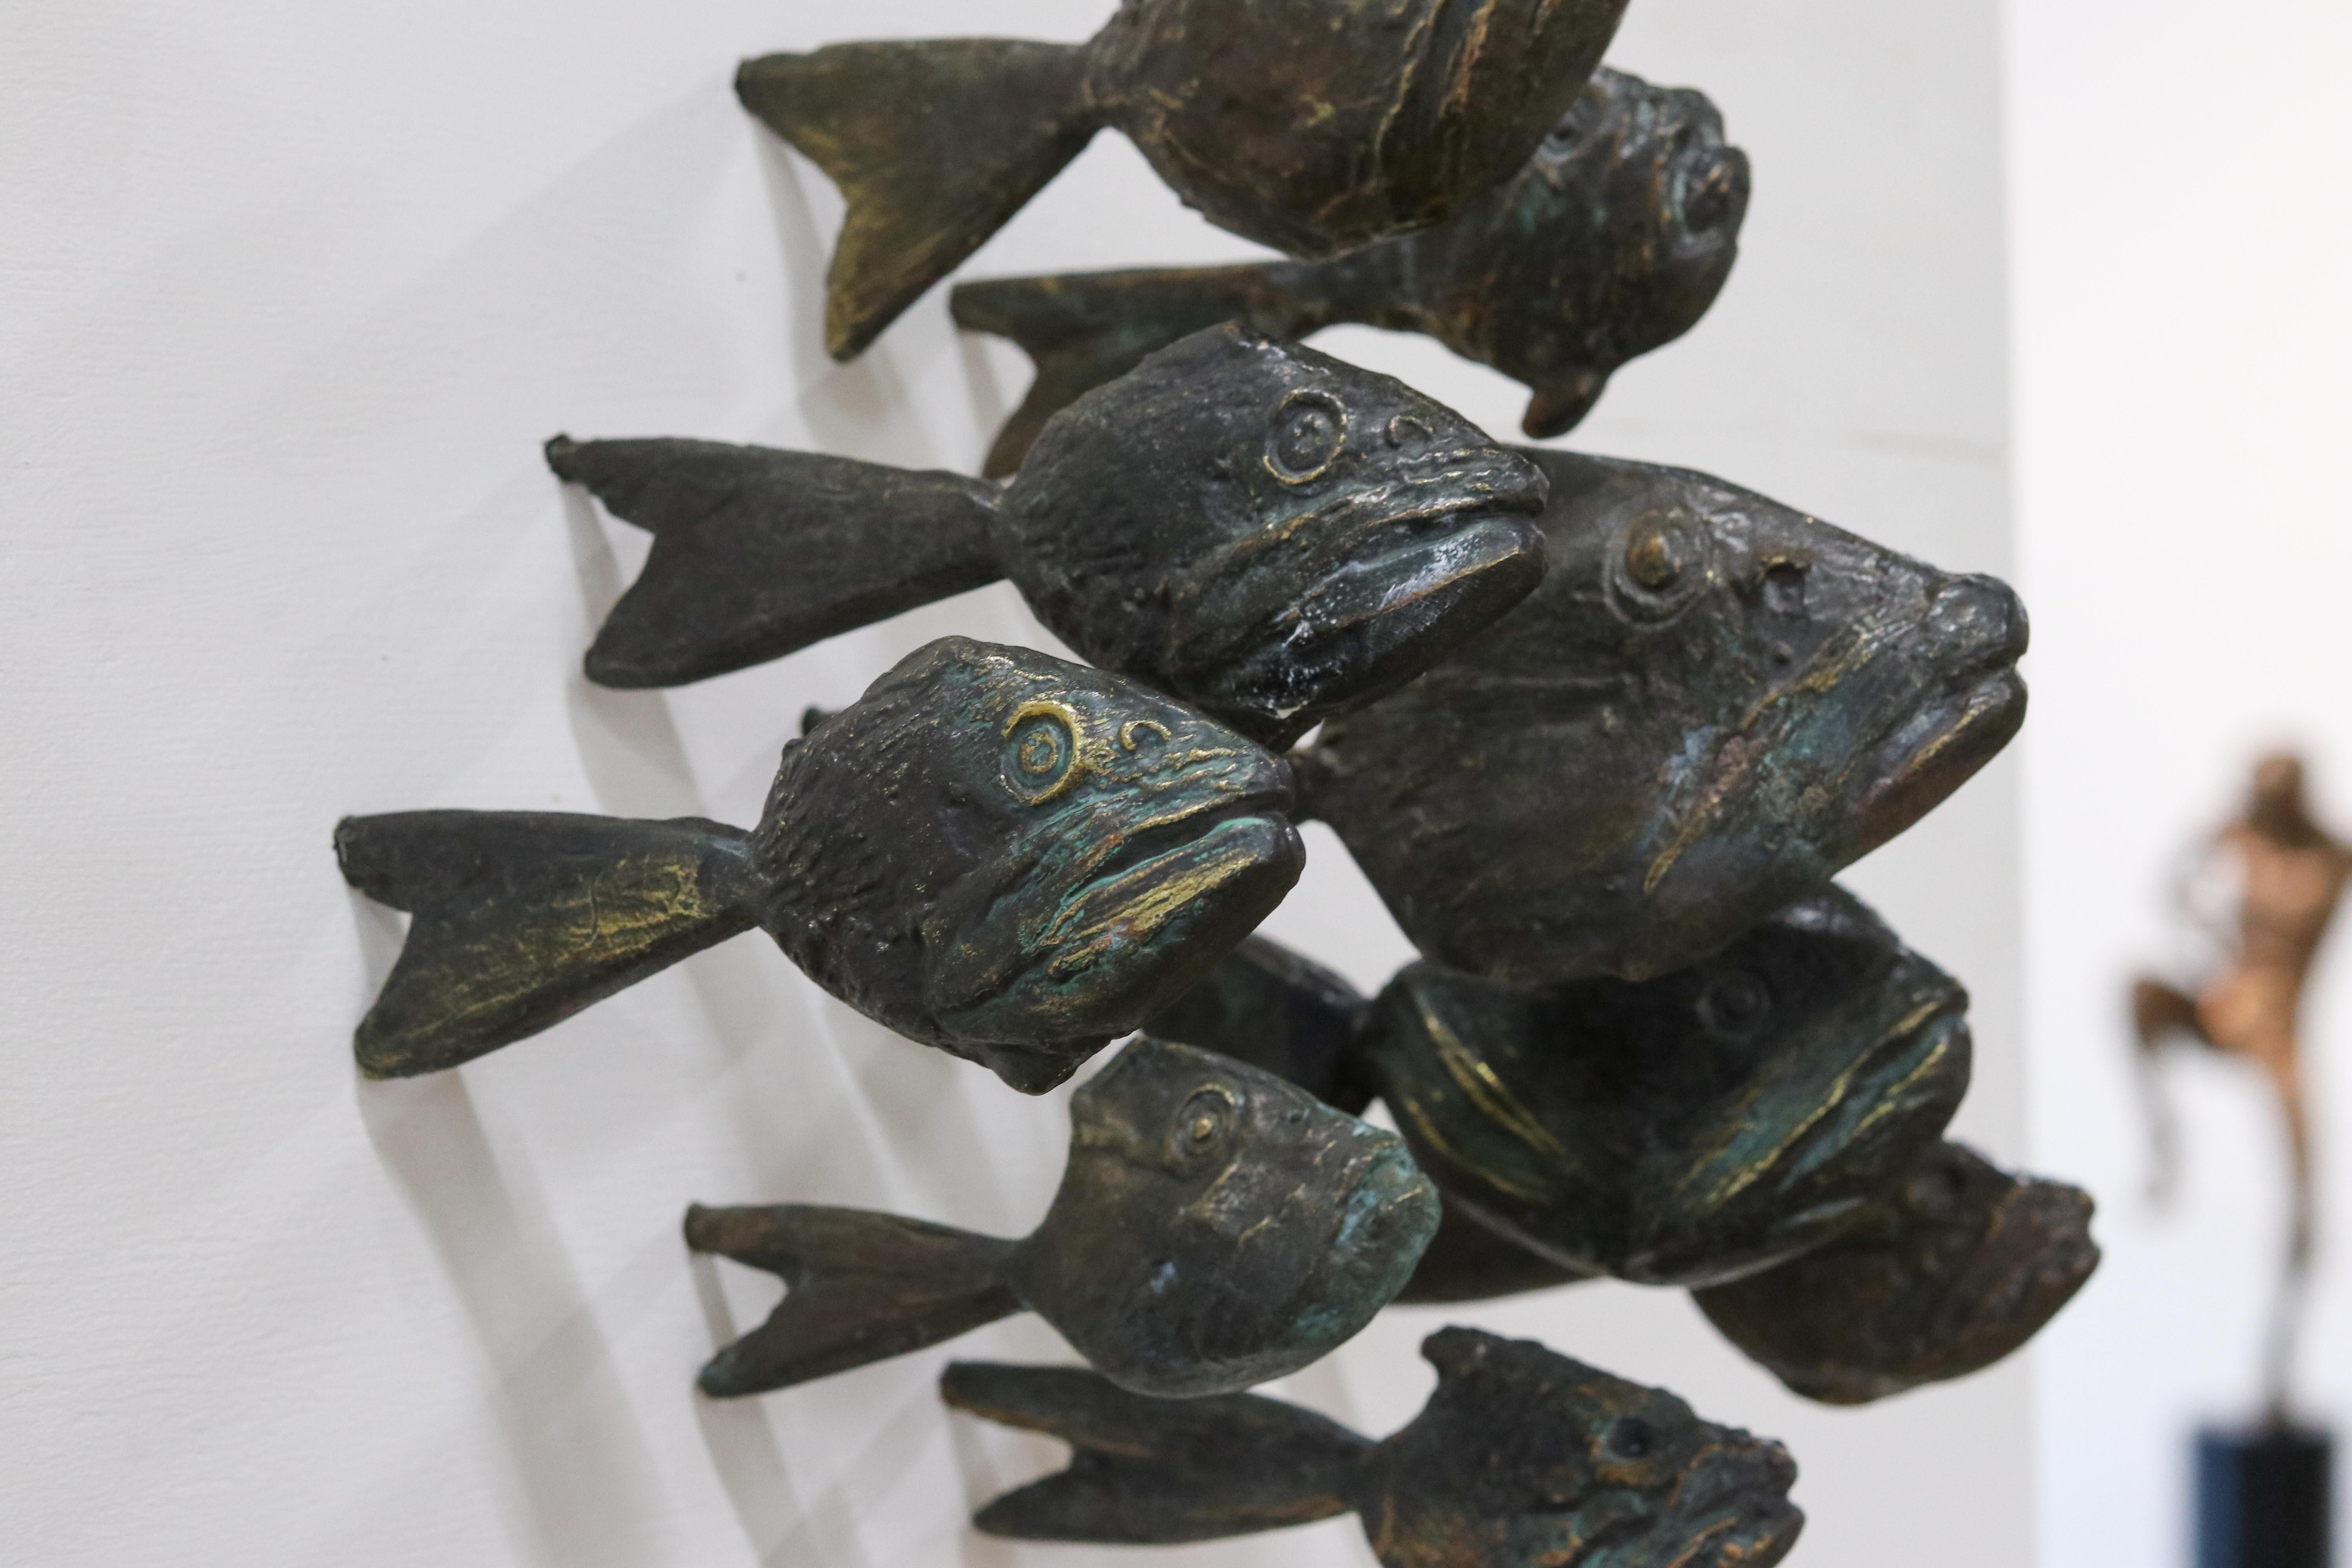 Yrgos Kypris Abstract Sculpture - Piranha's  - 21st Century Bronze Sculpture out of Piranha's  (45 fishes)